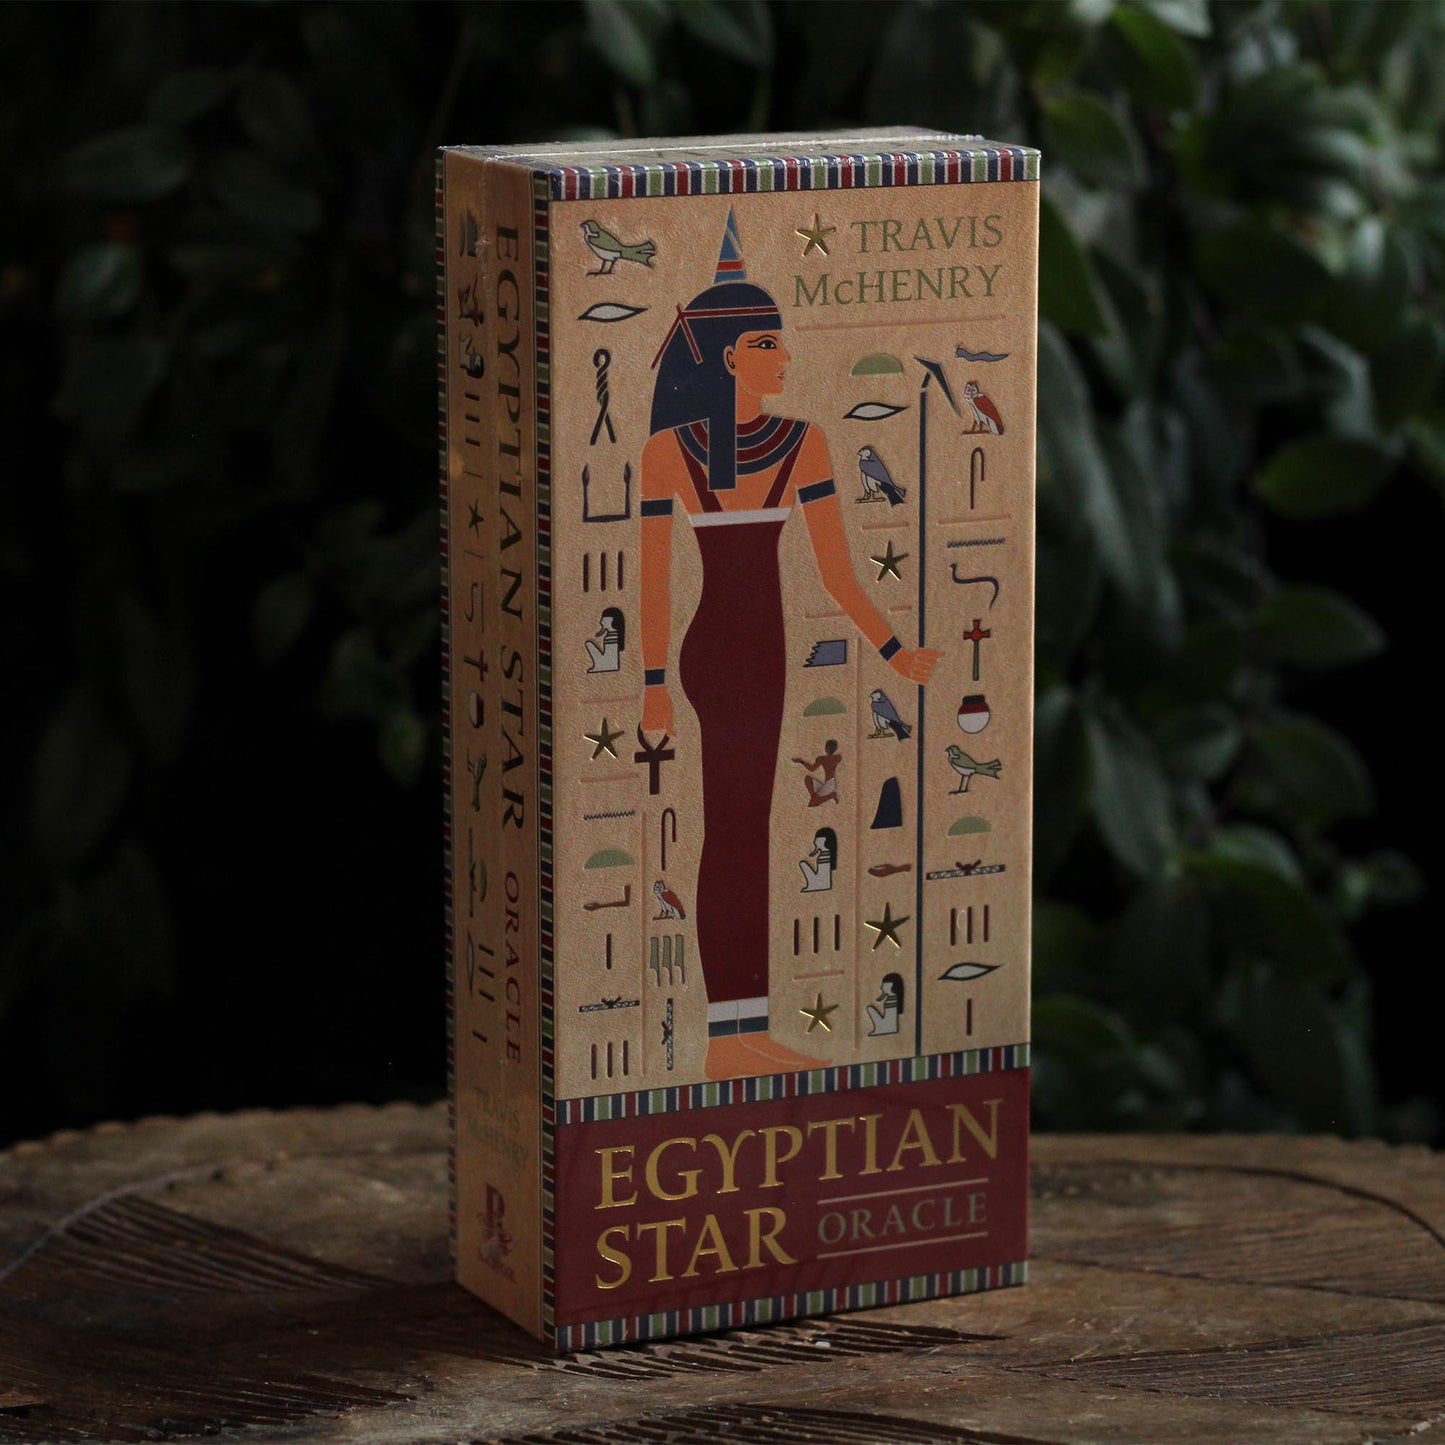 EGYPTIAN STAR ORACLE